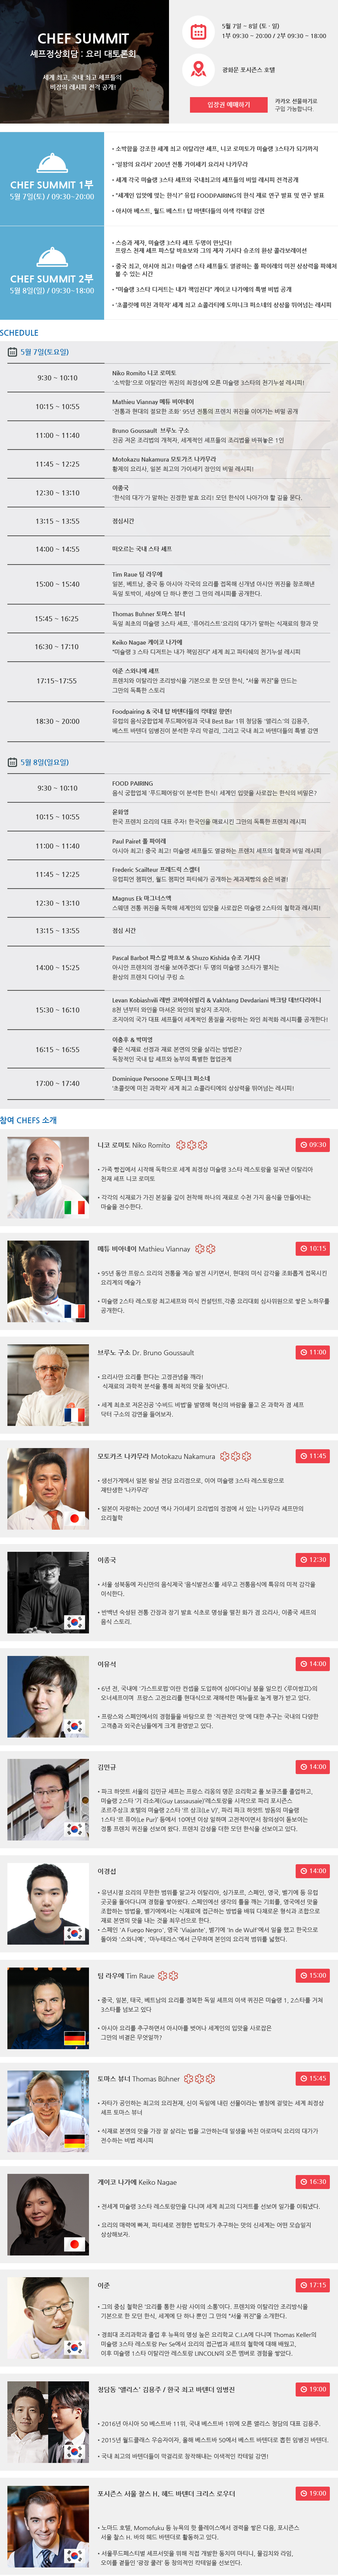 chef-summit1.jpg